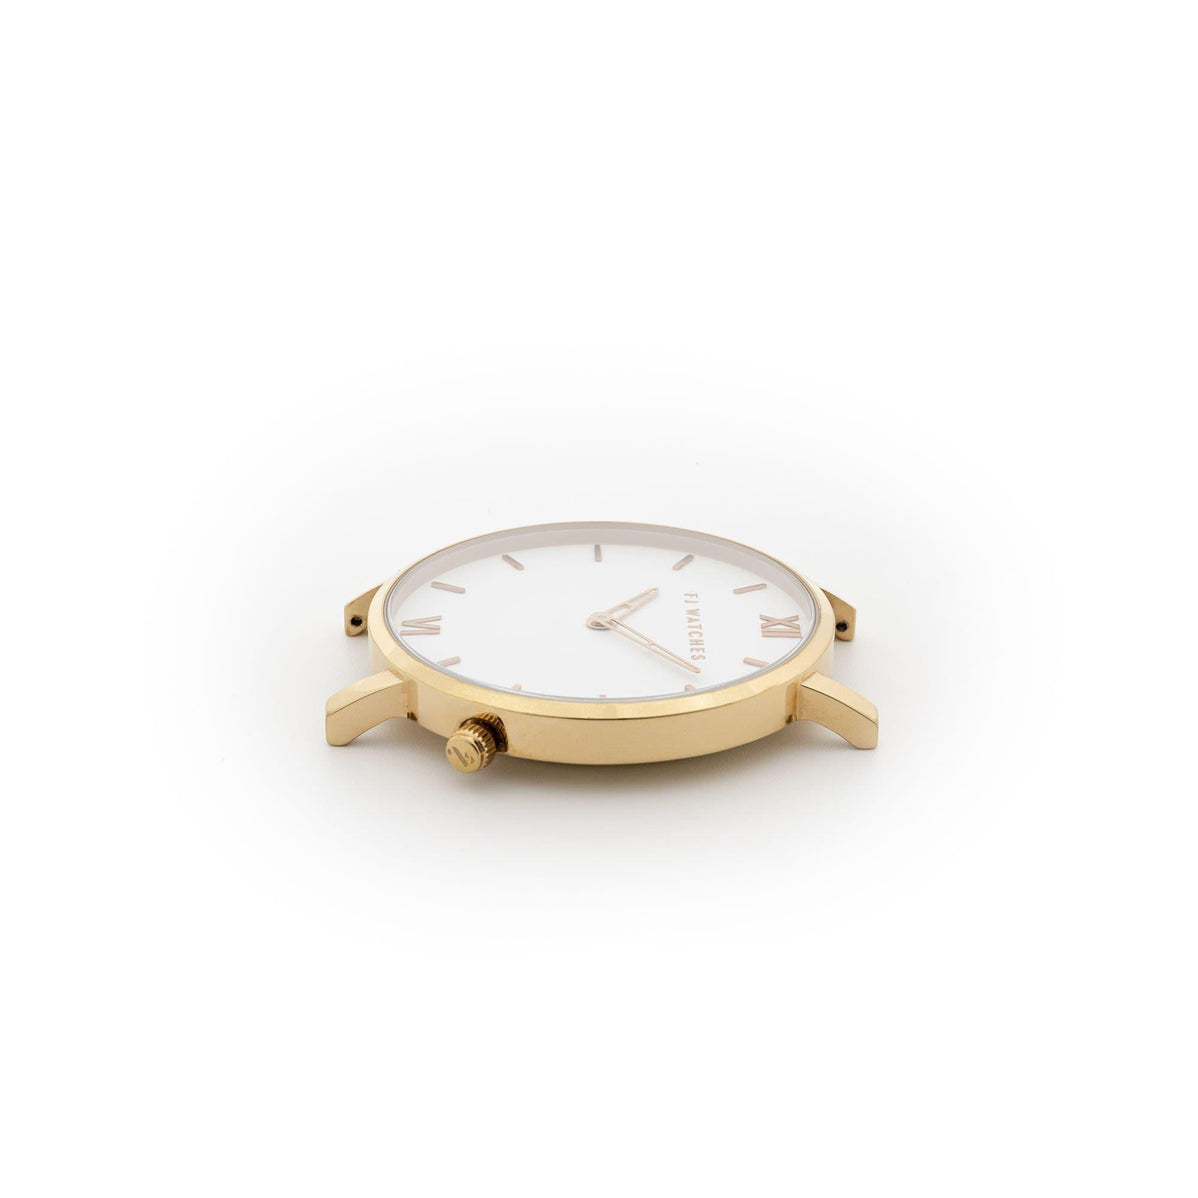 FJ Watches Golden sun white rose gold watch men 42mm minimalist dial